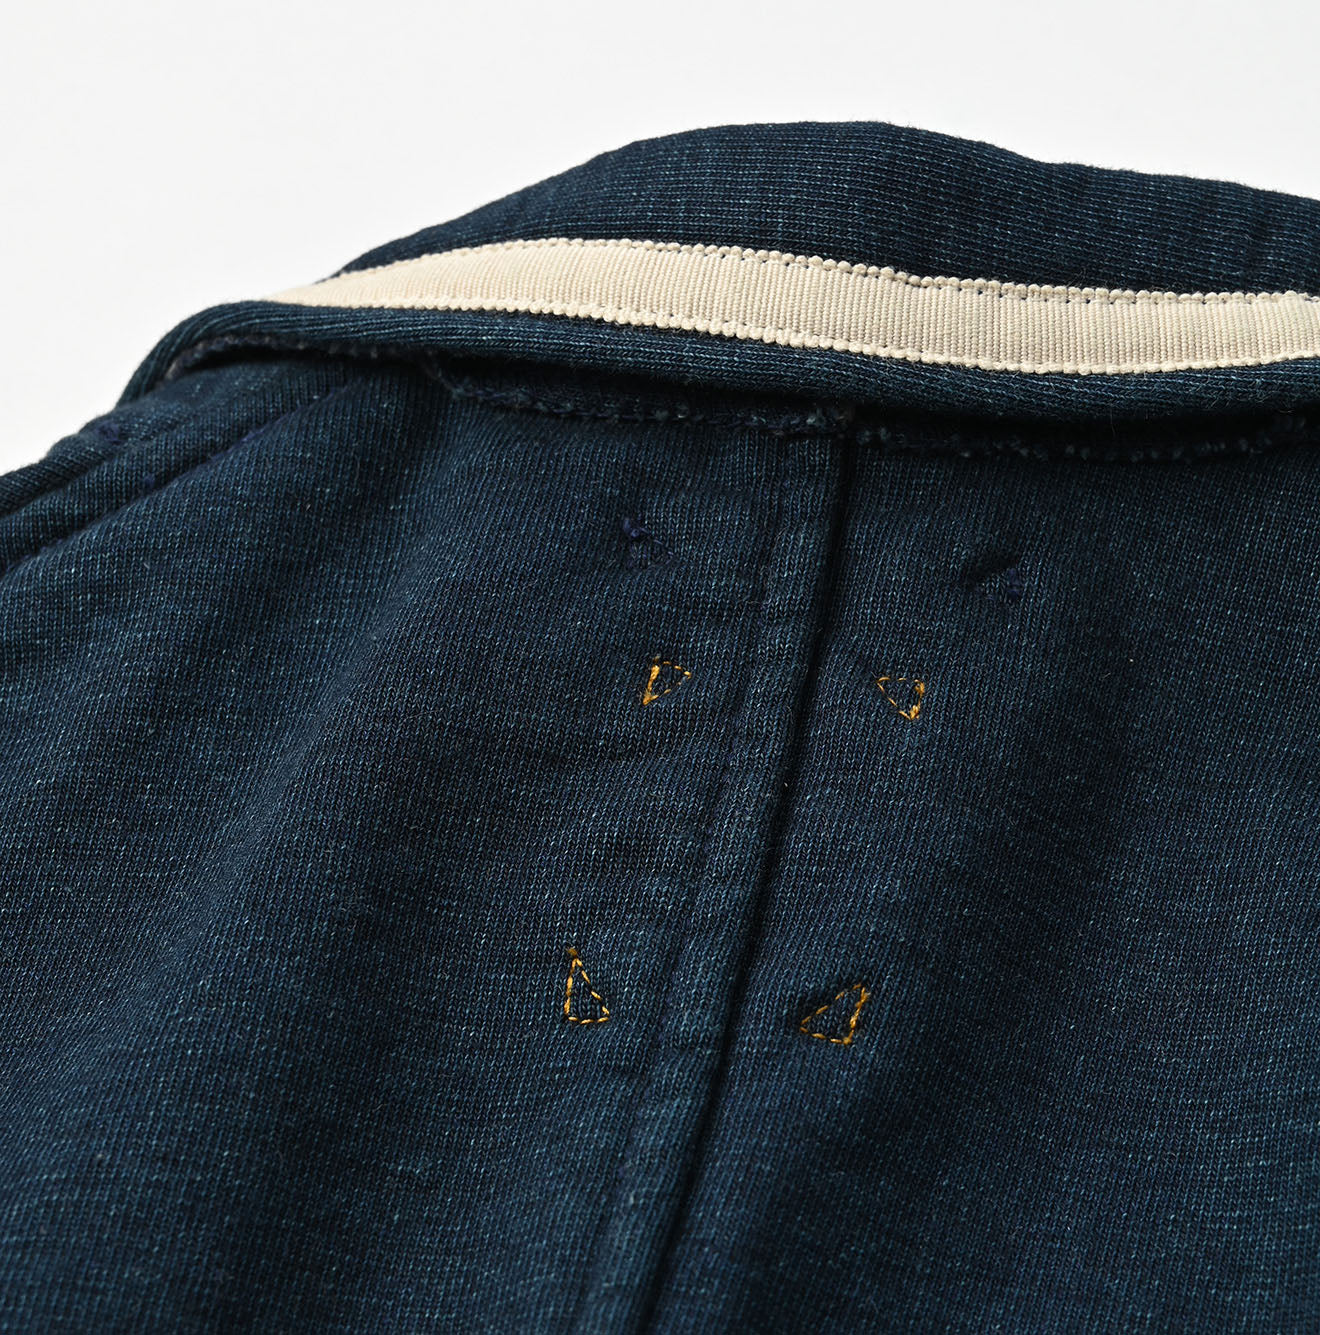 Indigo Hokkaido Cotton Fleece 908 Jacket